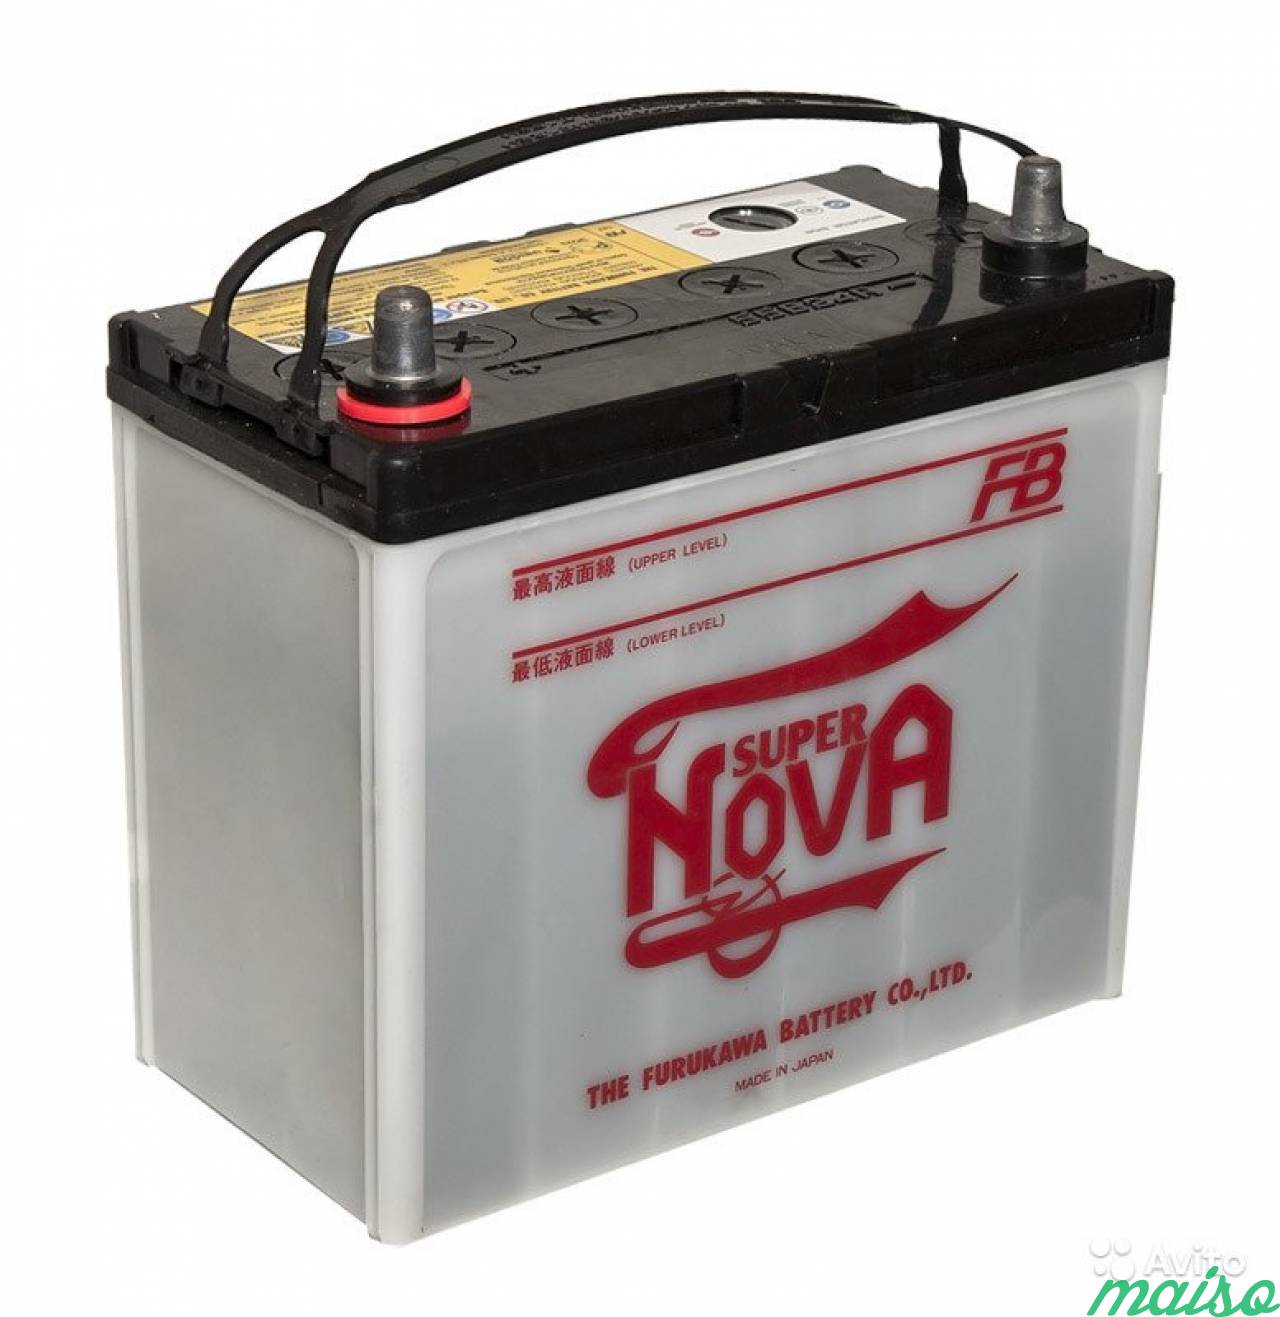 Nova battery. Furukawa Battery 45ah. Автомобильный аккумулятор Furukawa Battery super Nova 55b24r. Super Nova 80d26r. 80d26r Furukawa.